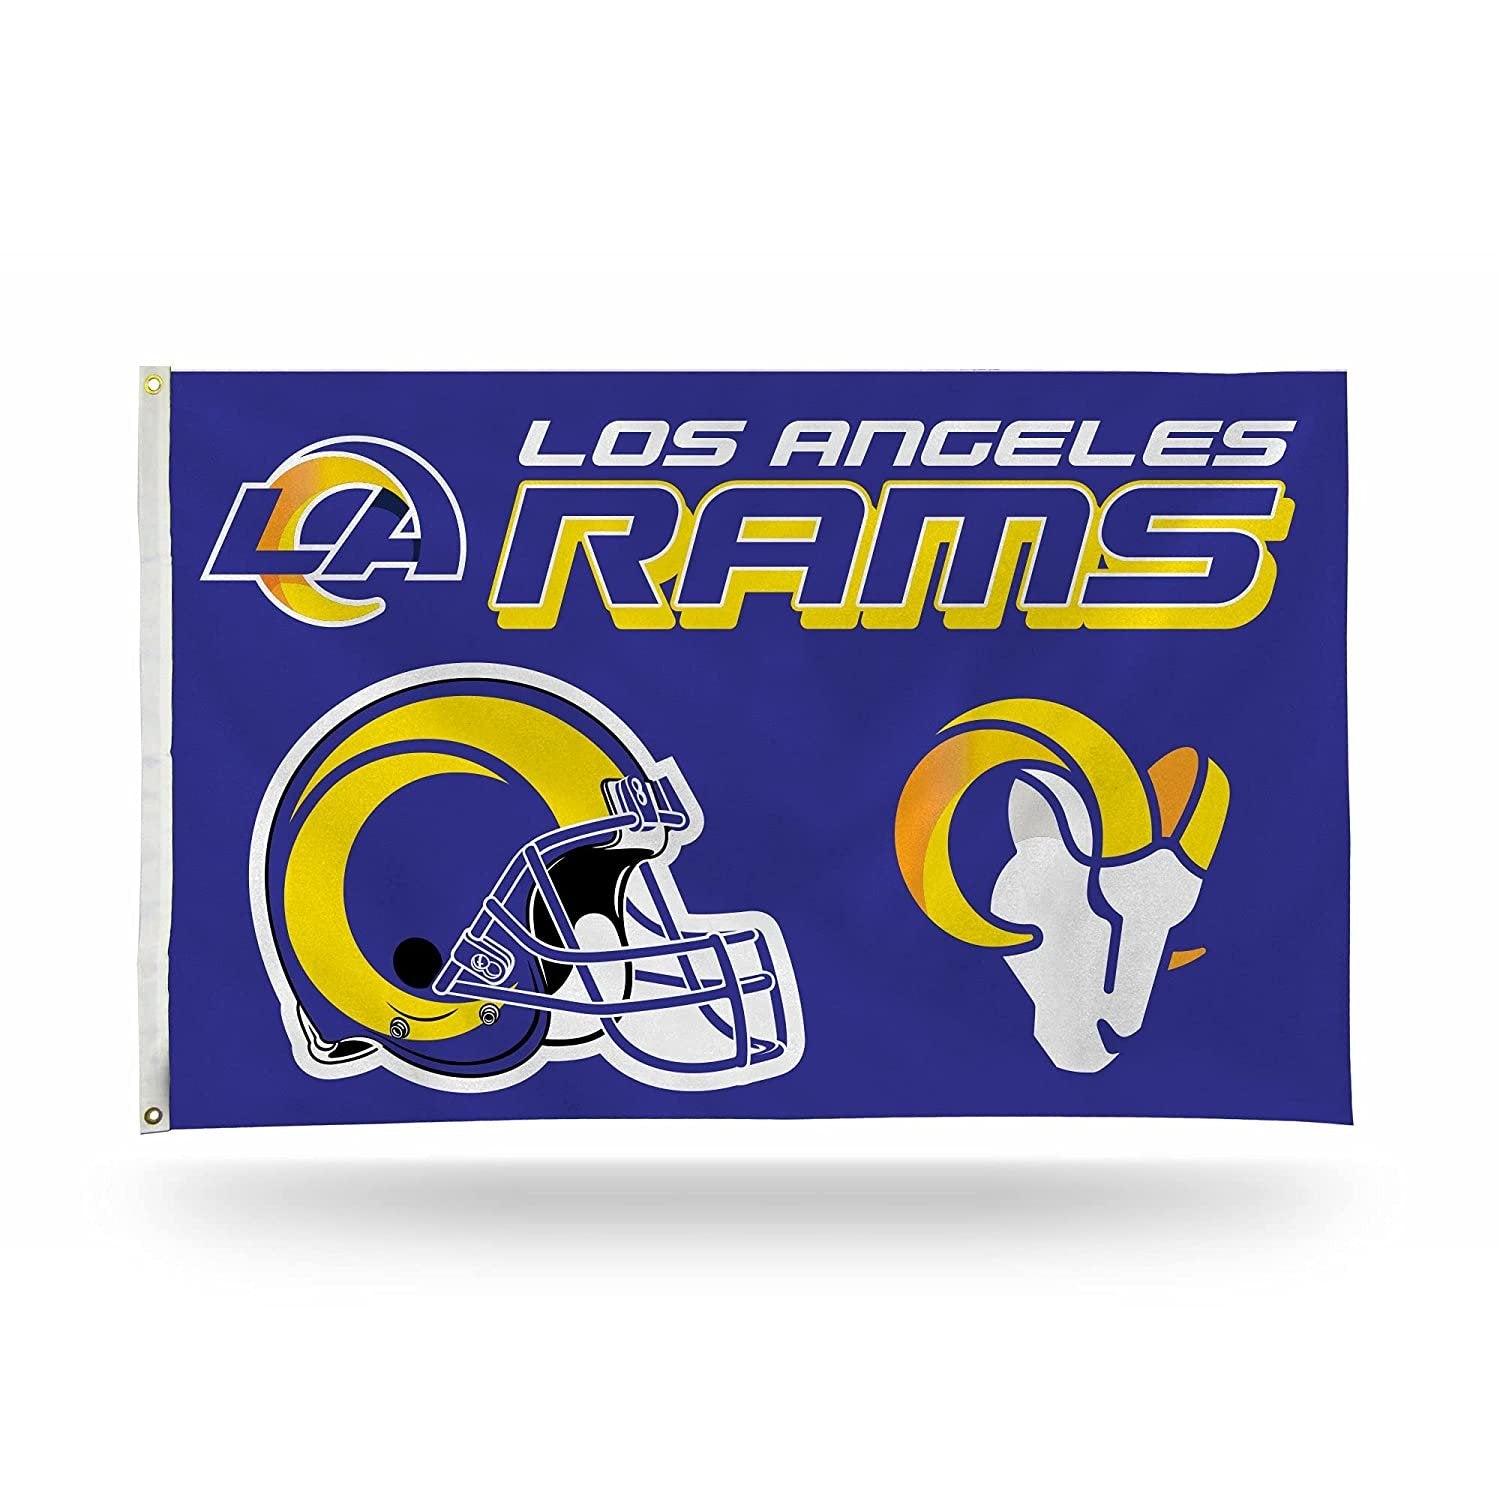 Los Angeles Rams Premium 3x5 Feet Flag Banner, Helmet Design, Metal Grommets, Outdoor Use, Single Sided